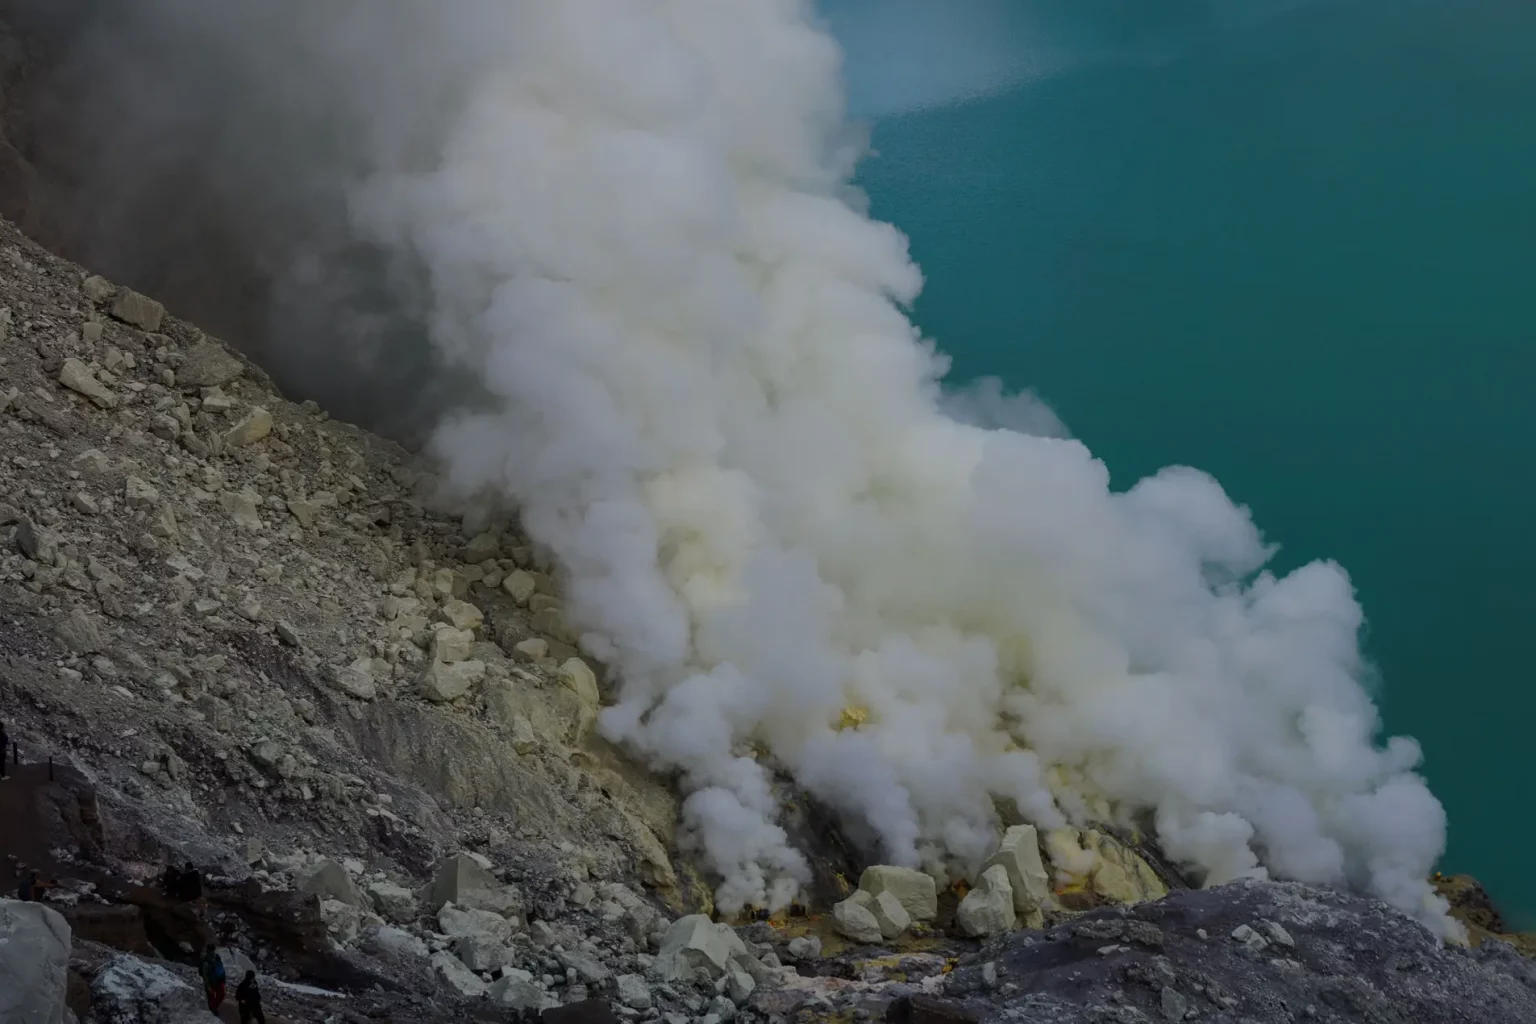 view on Ijen volcano and lake, with sulfuric smoke